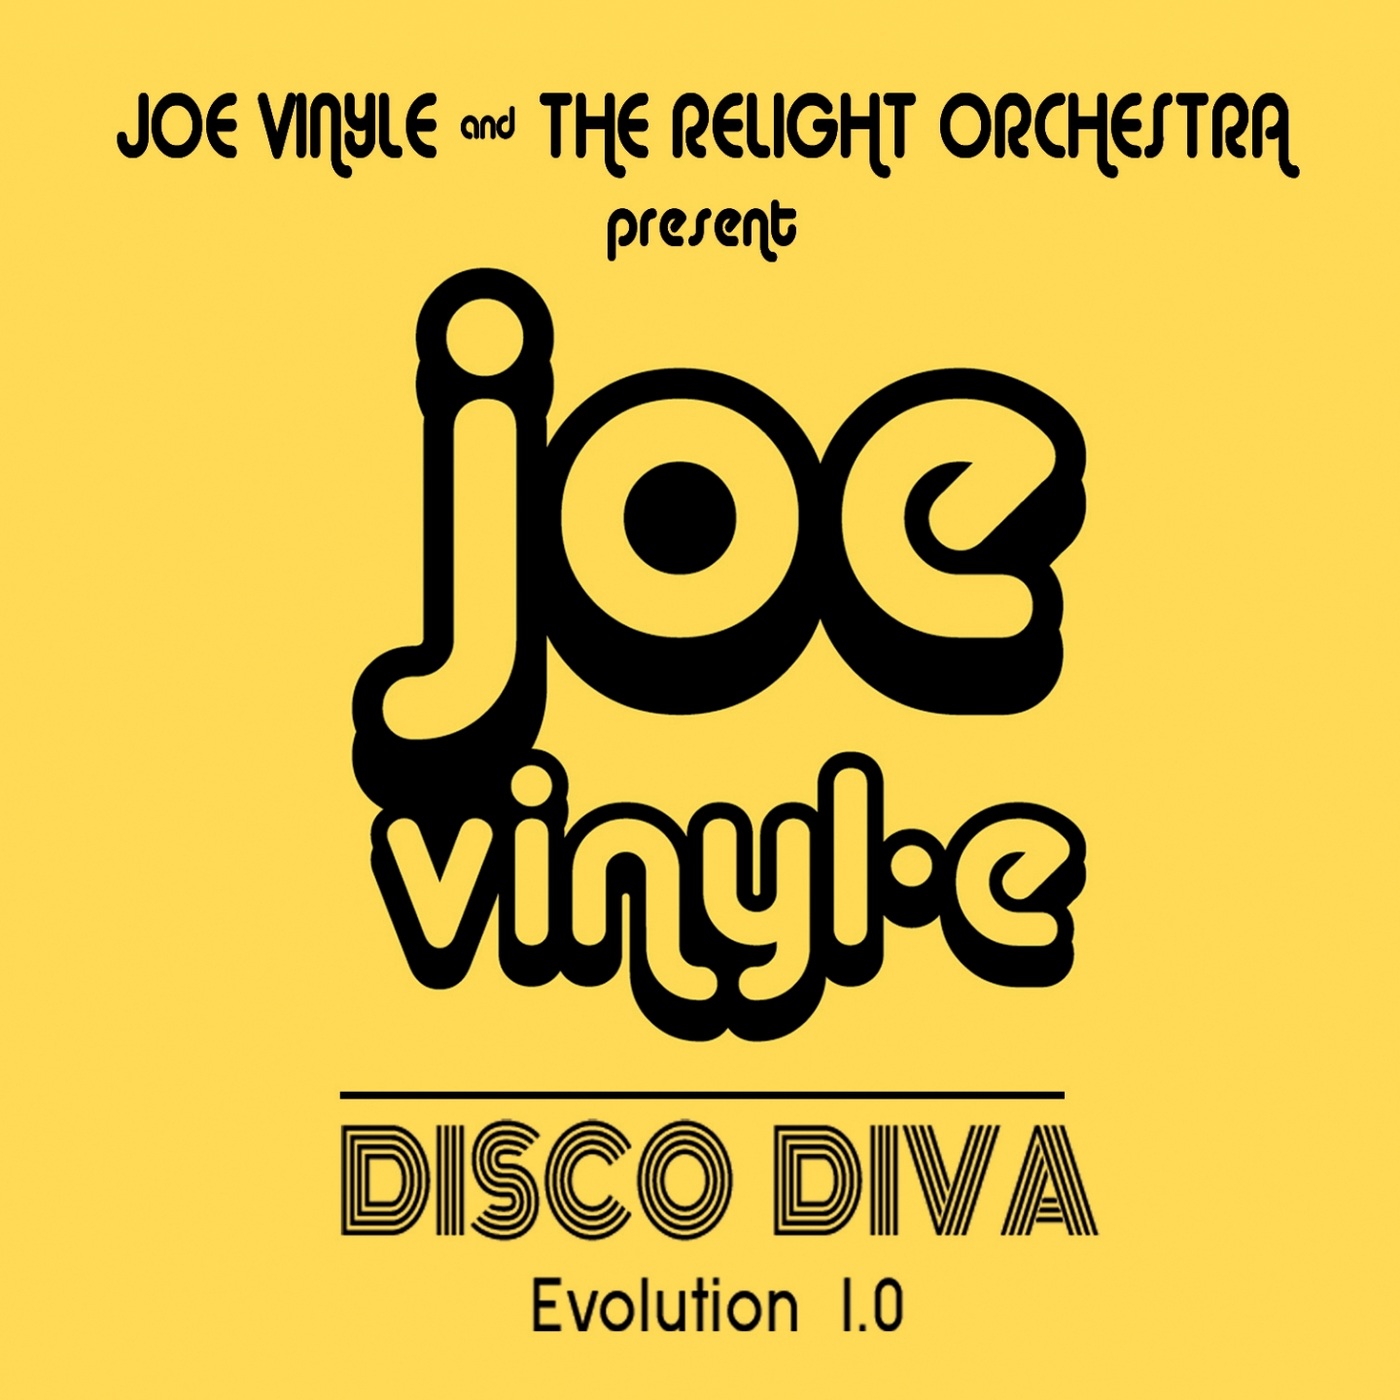 Joe Vinyle - Disco Diva Evolution 1.0 / Irma records